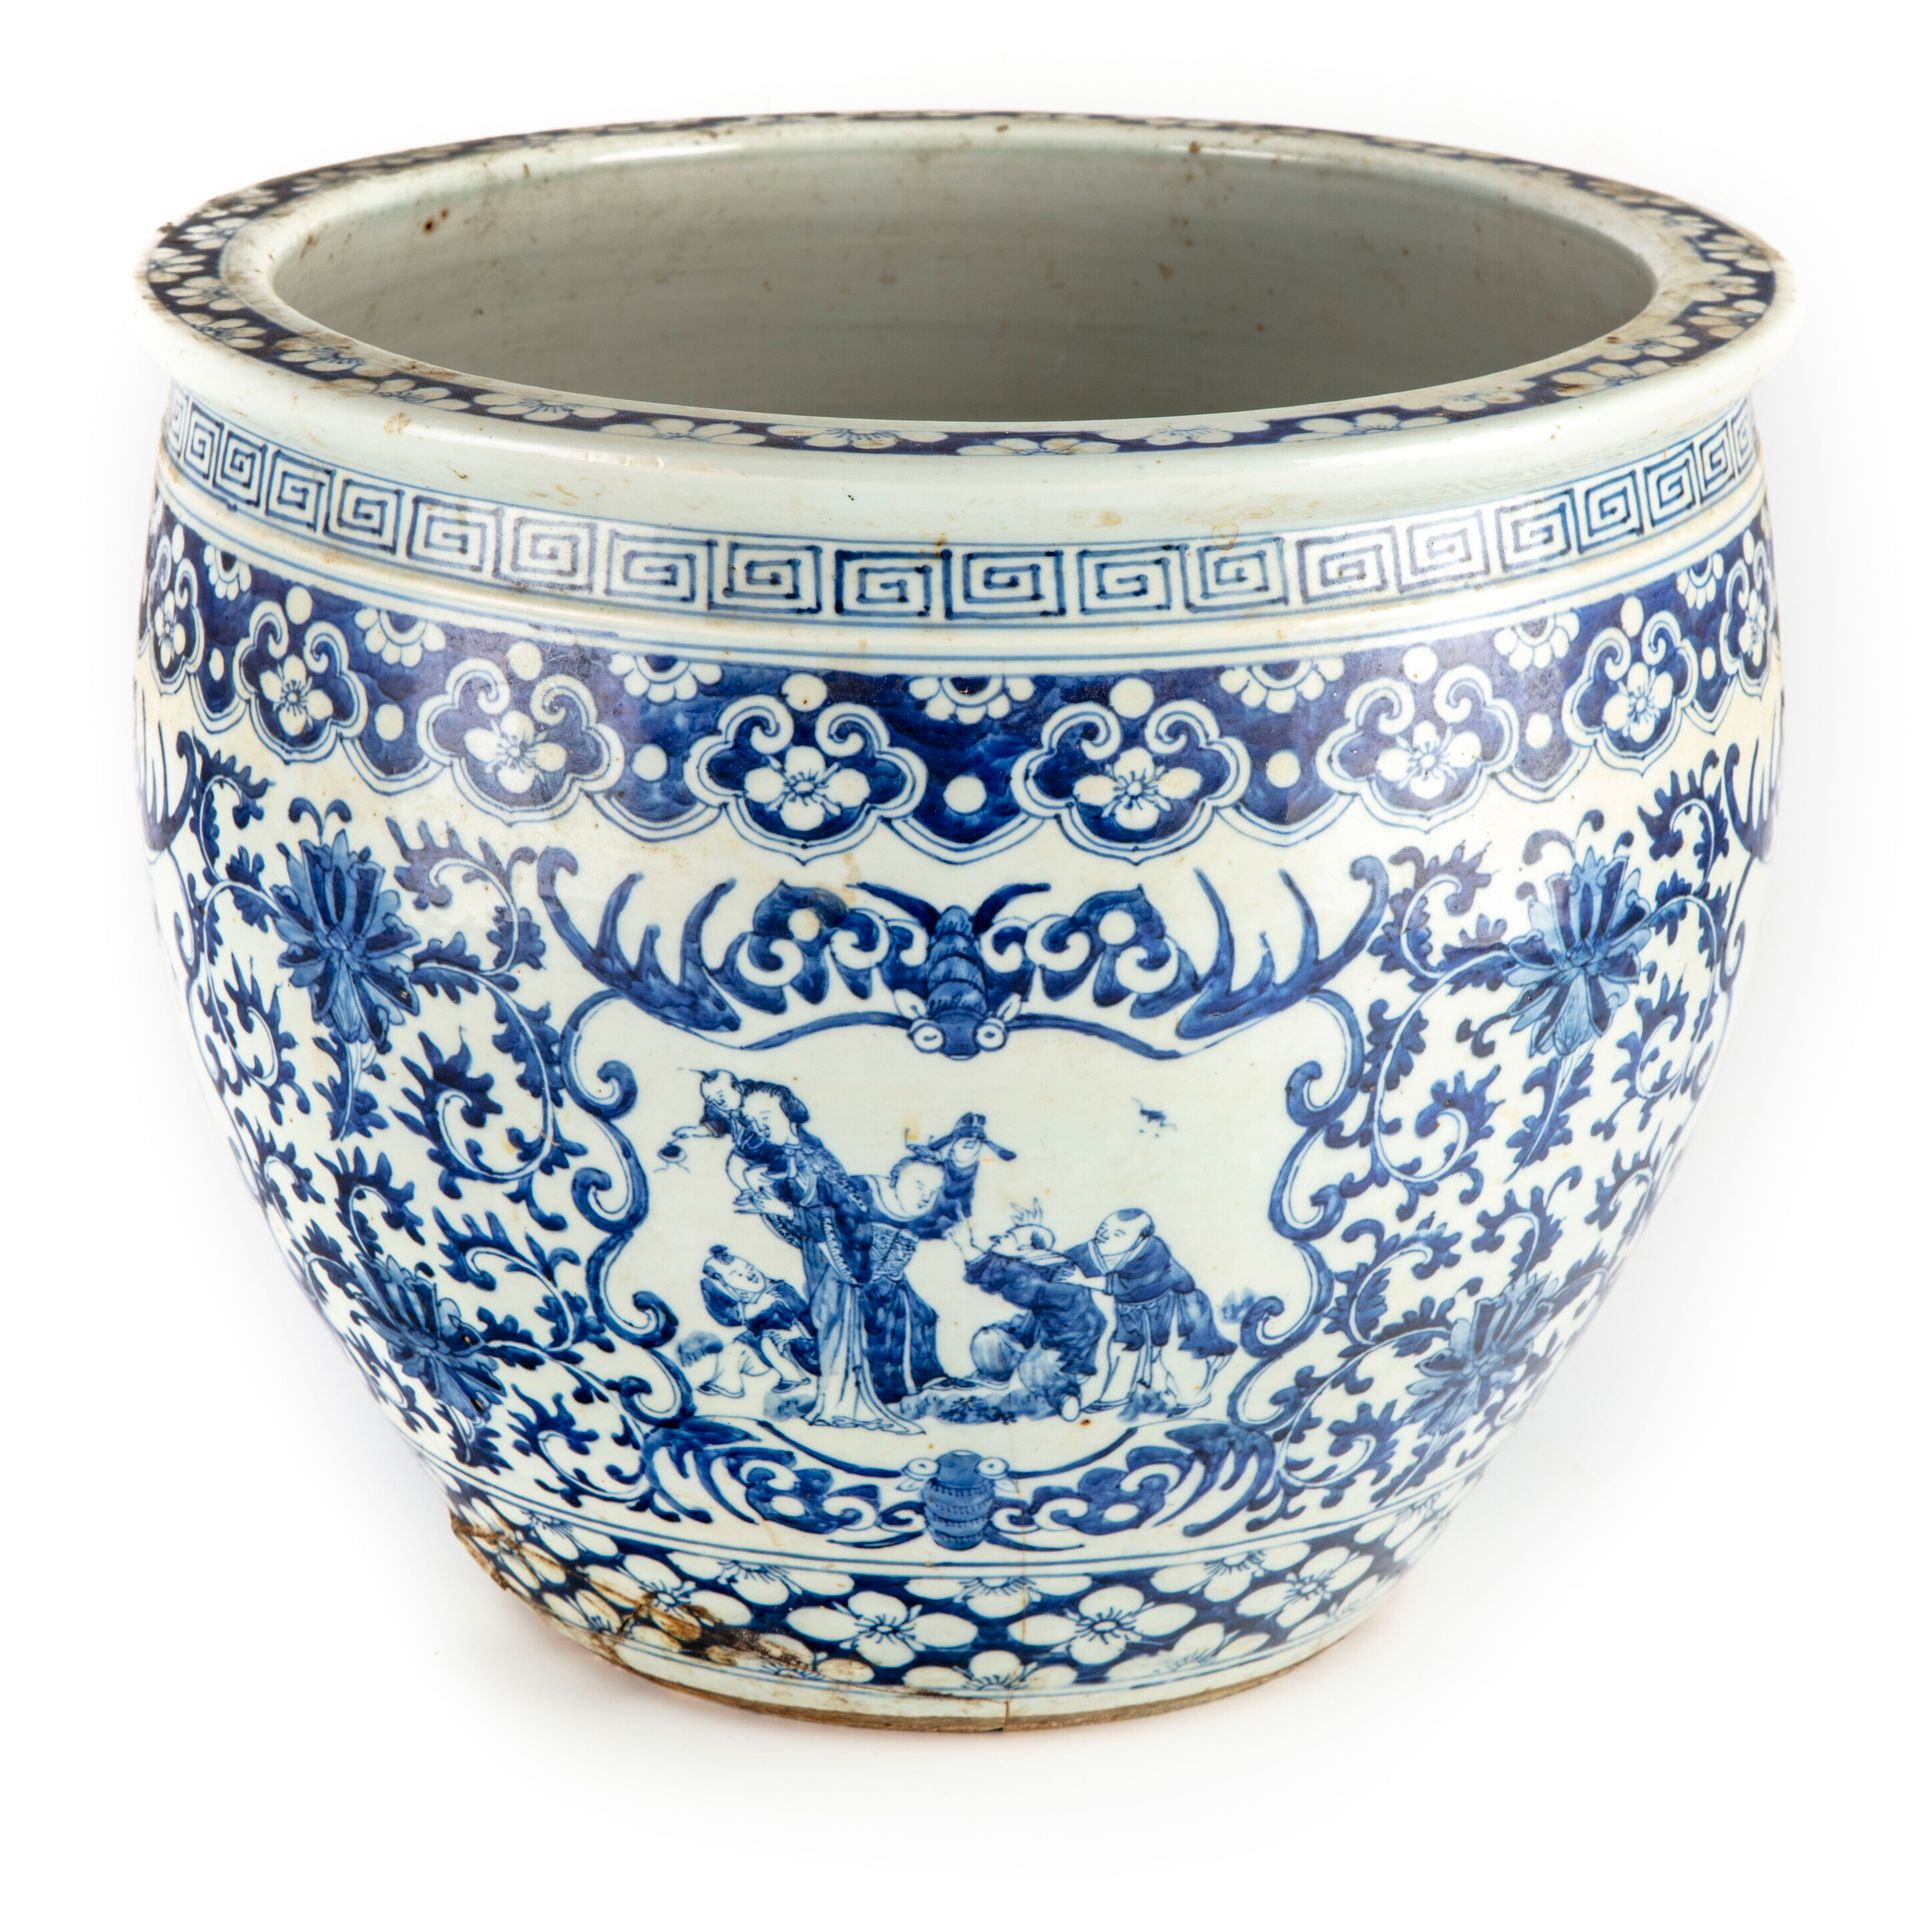 CHINE 中国

蓝白相间的叶子、羊脂球和人物储备装饰的瓷质鱼缸

H.31 cm; D. 36 cm

断裂并粘在底座下